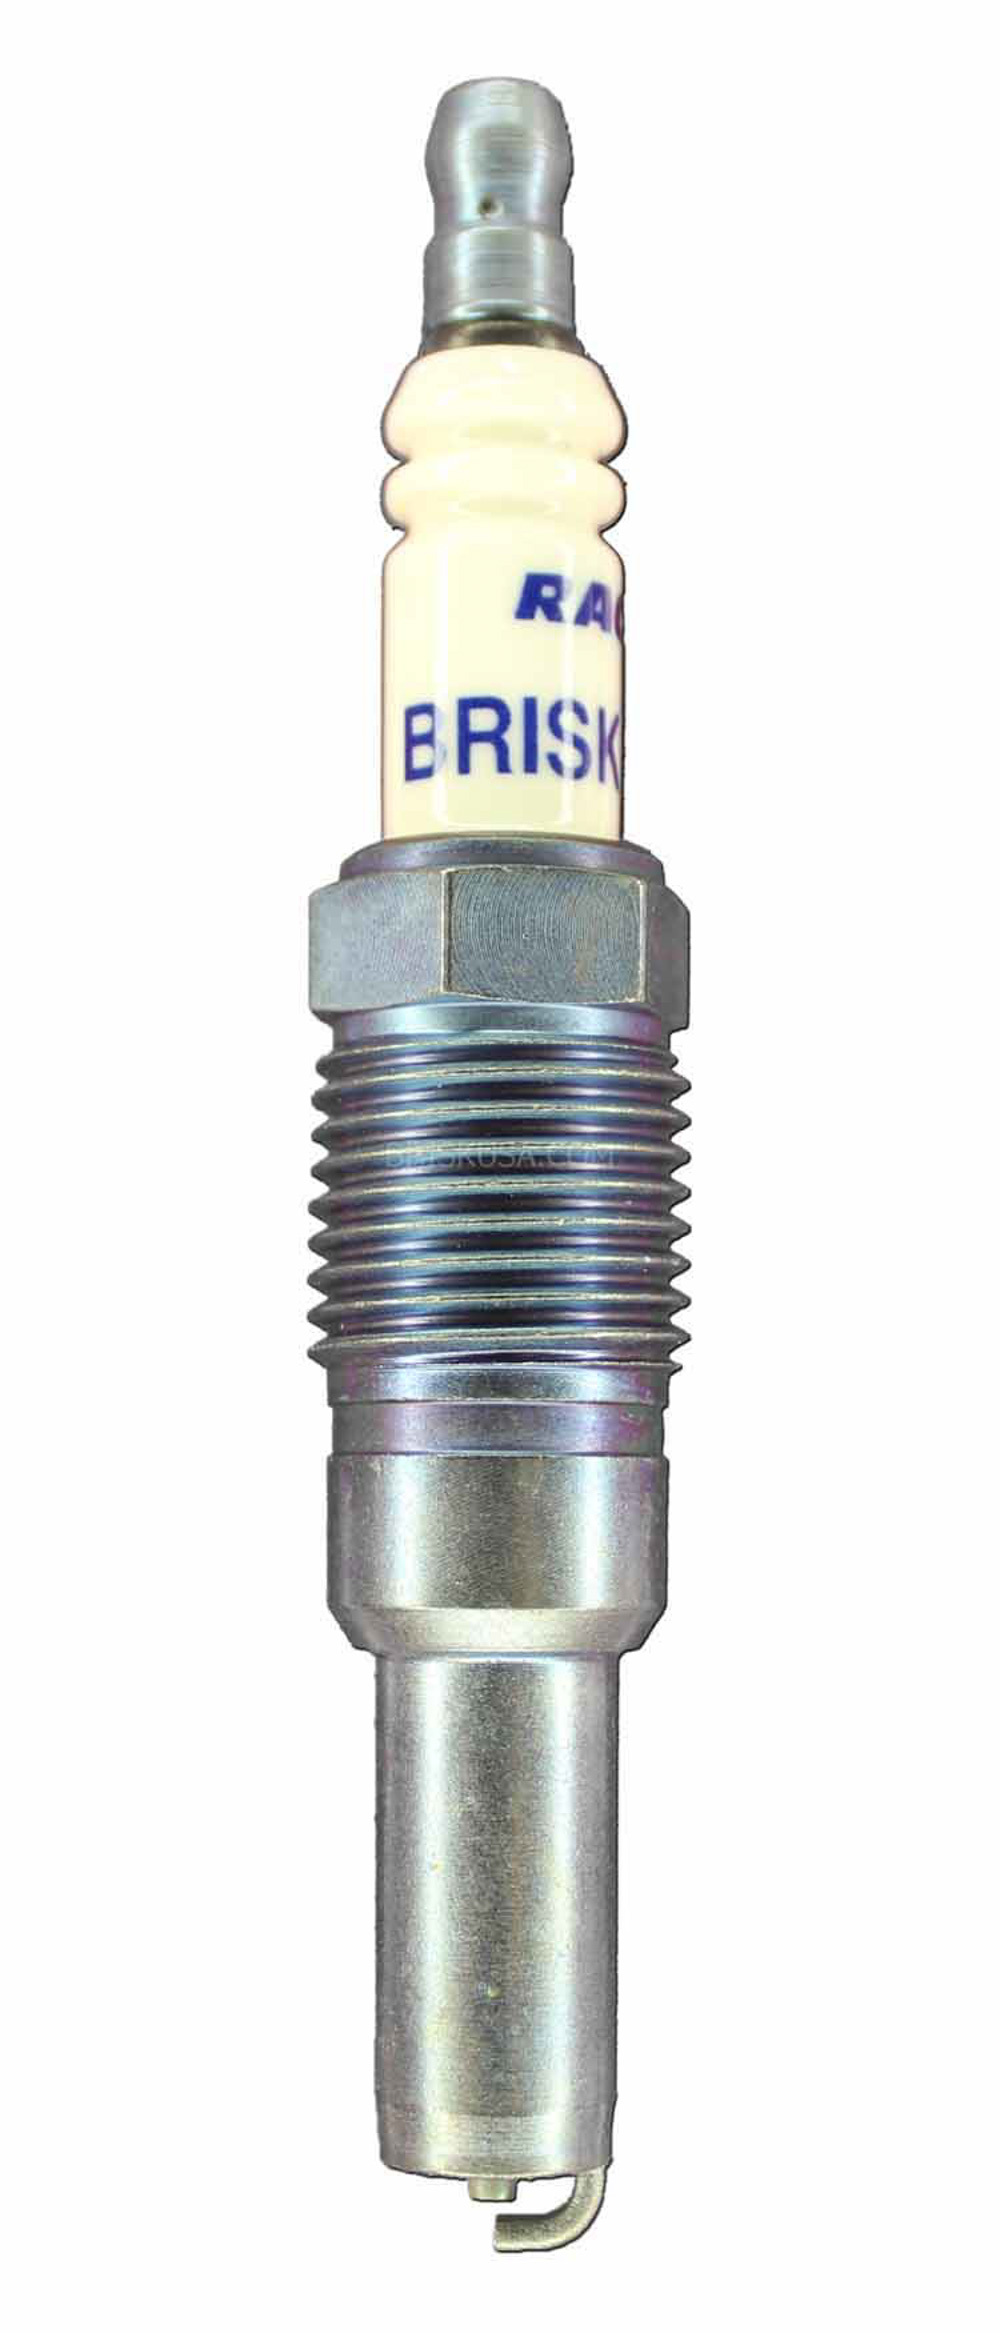 Brisk Racing Plugs 3VR14S Spark Plug, Silver Racing, 16 mm Thread, 22 mm Reach, Heat Range 14, Tapered Seat, Resistor, Each